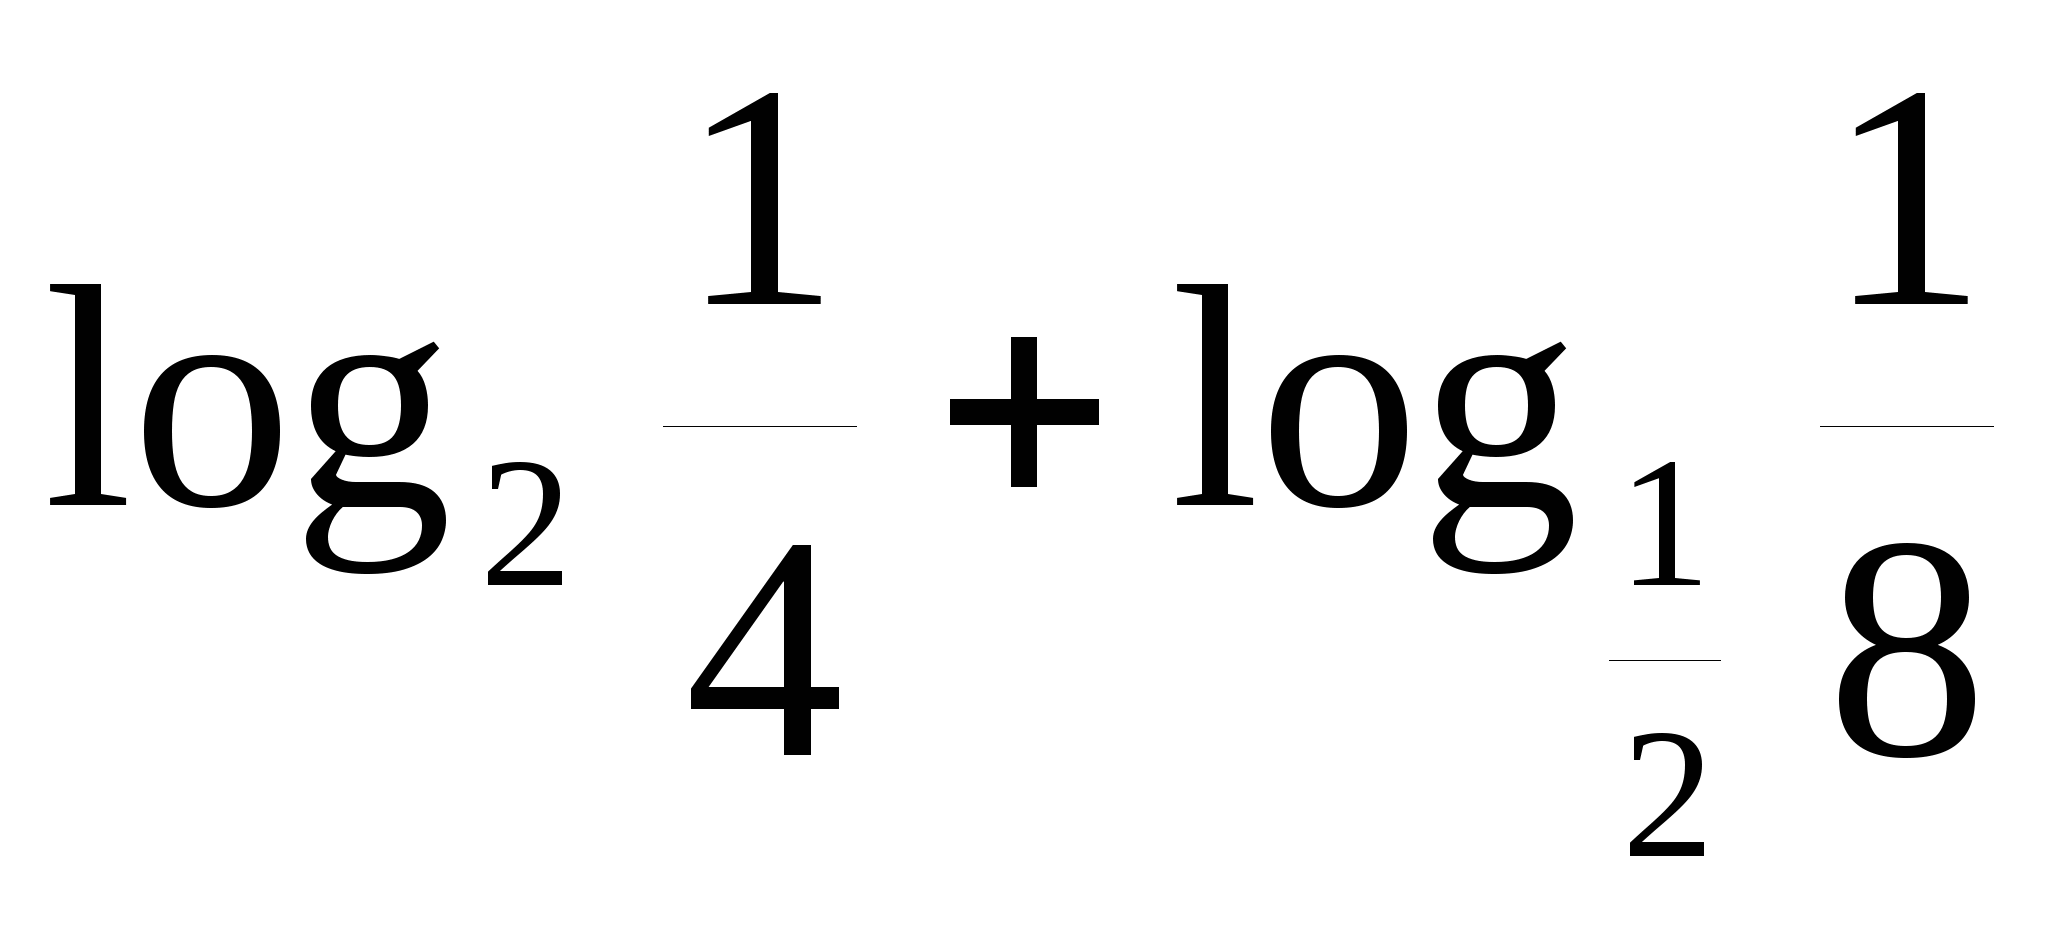 Конспект урока математики по теме Логарифмические уравнения